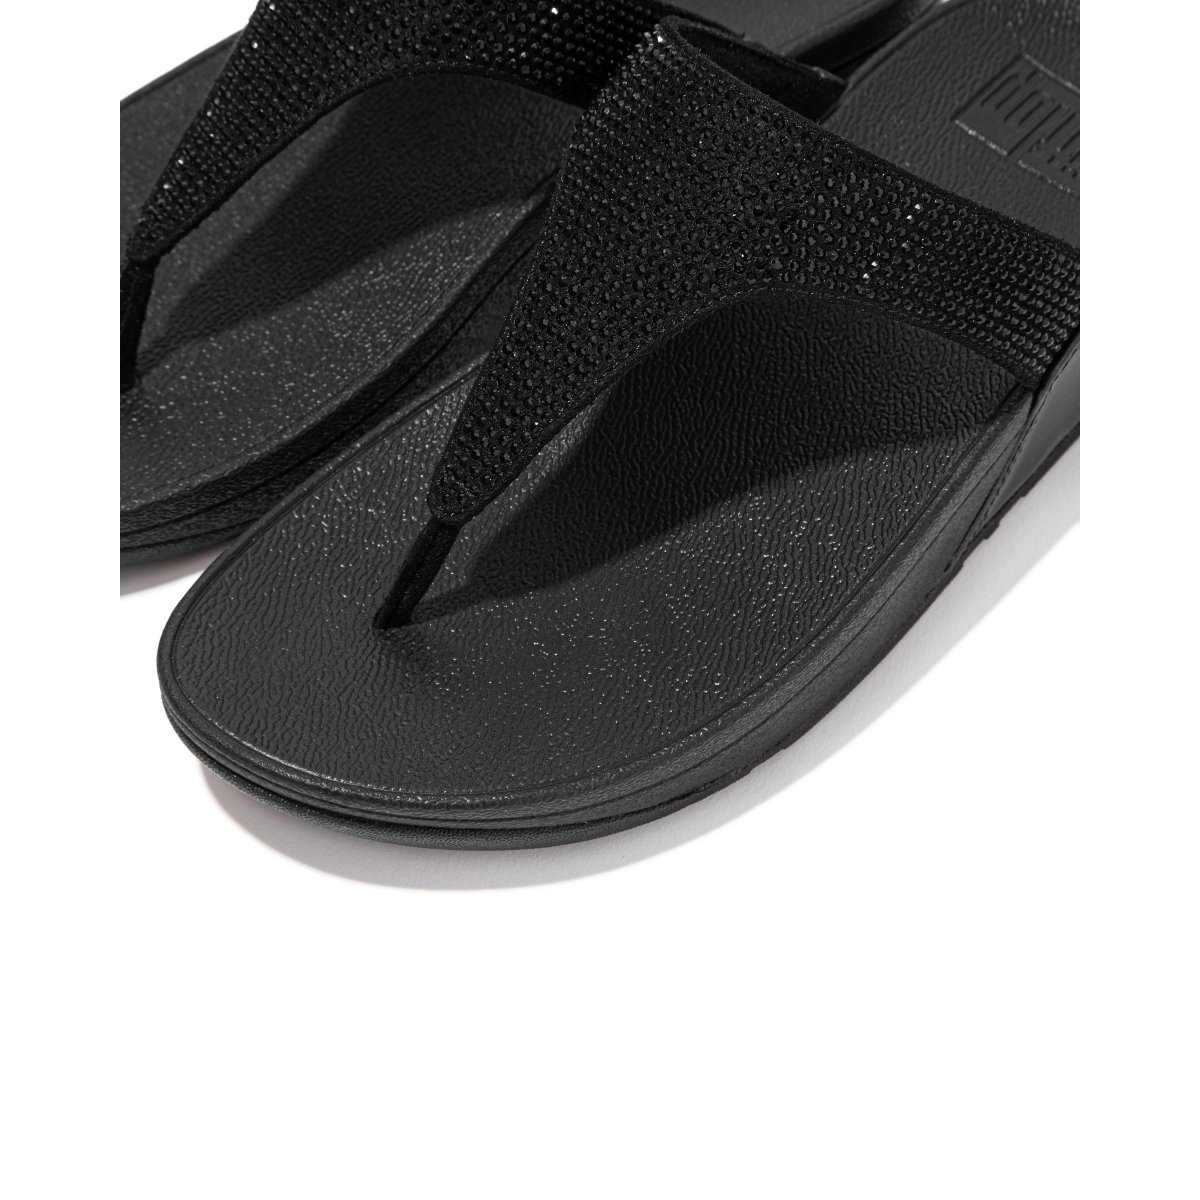 FitFlop LULU Crystal Embellished Toe-Post Sandals All Black close up